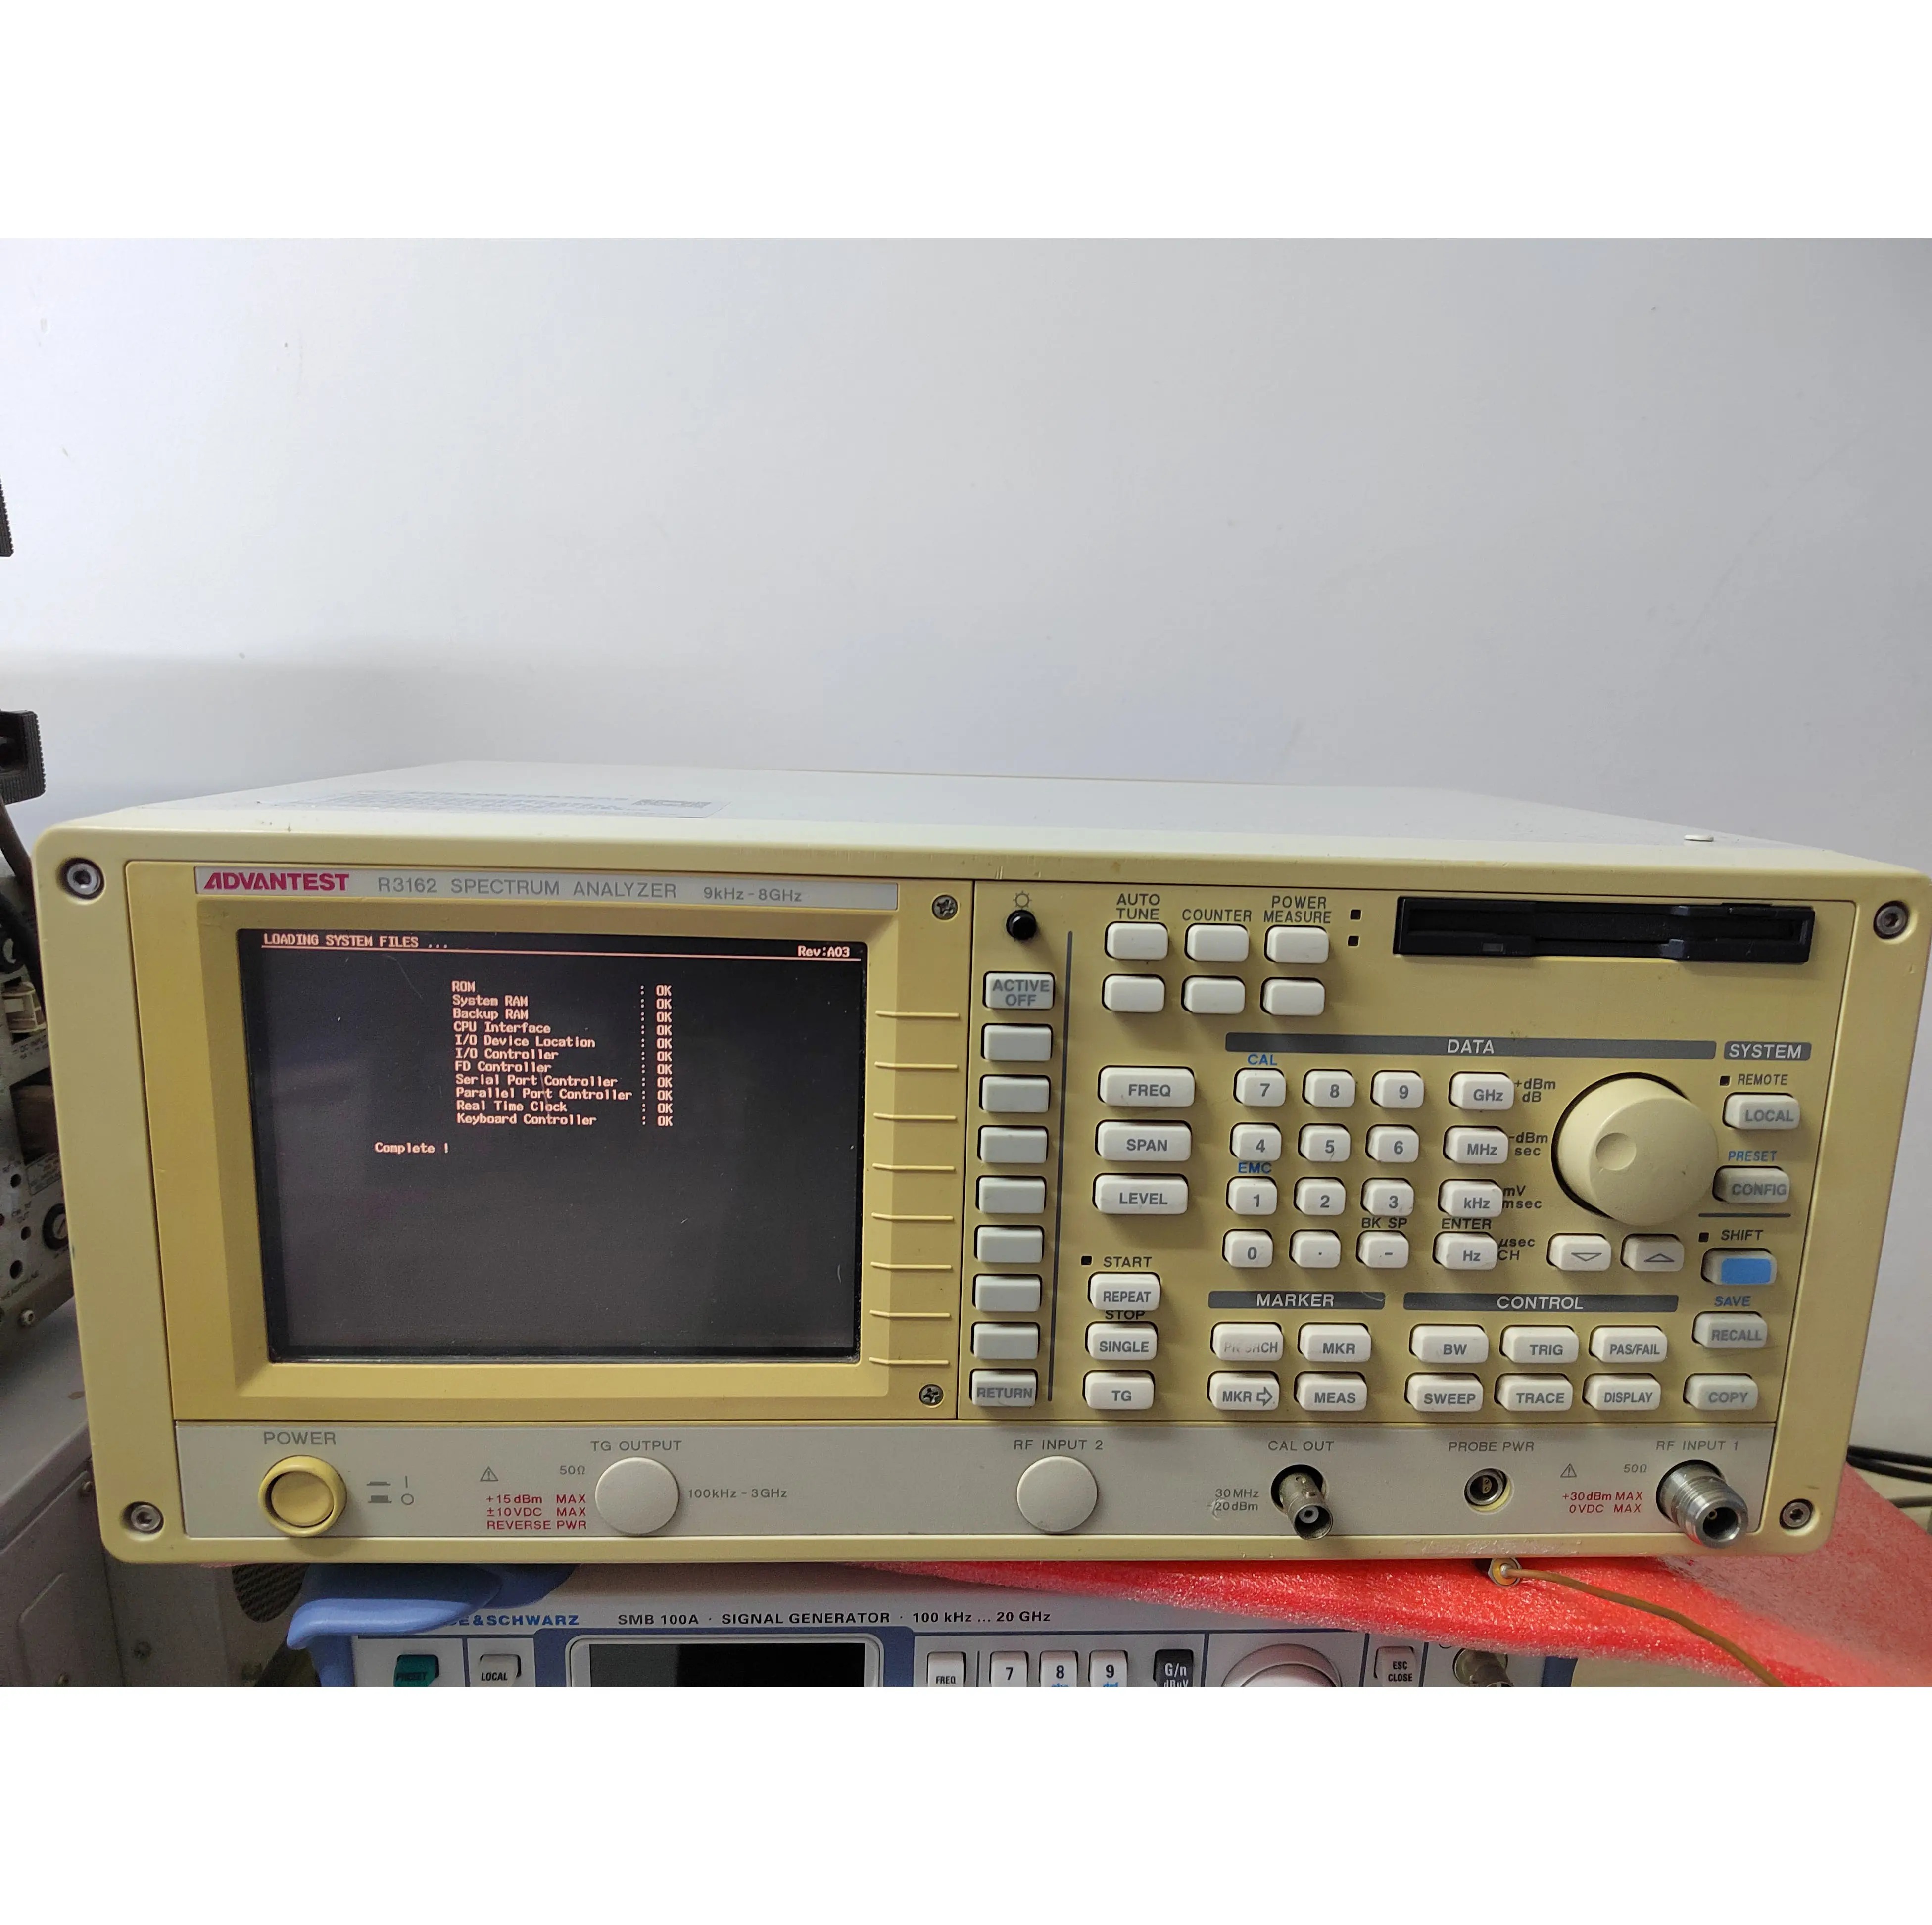 Vantest r 3162 analisador de espectro-9khz-8ghz